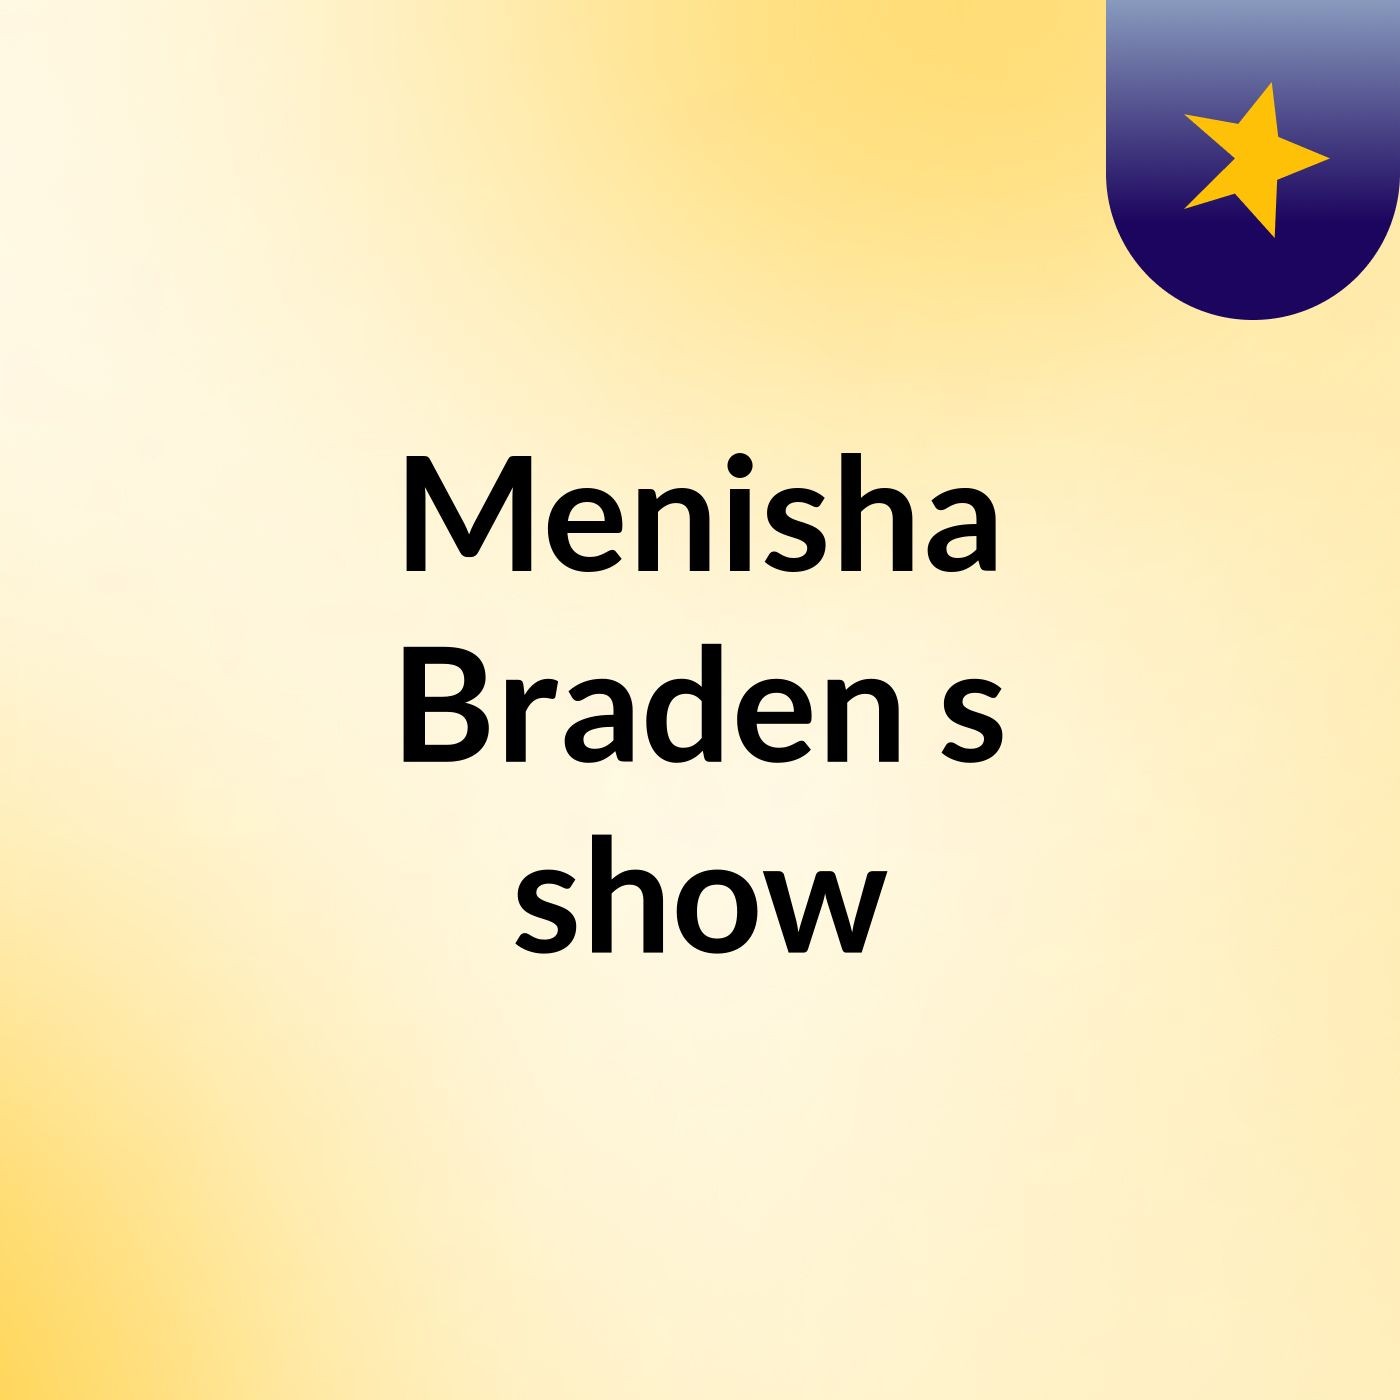 Menisha Braden's show